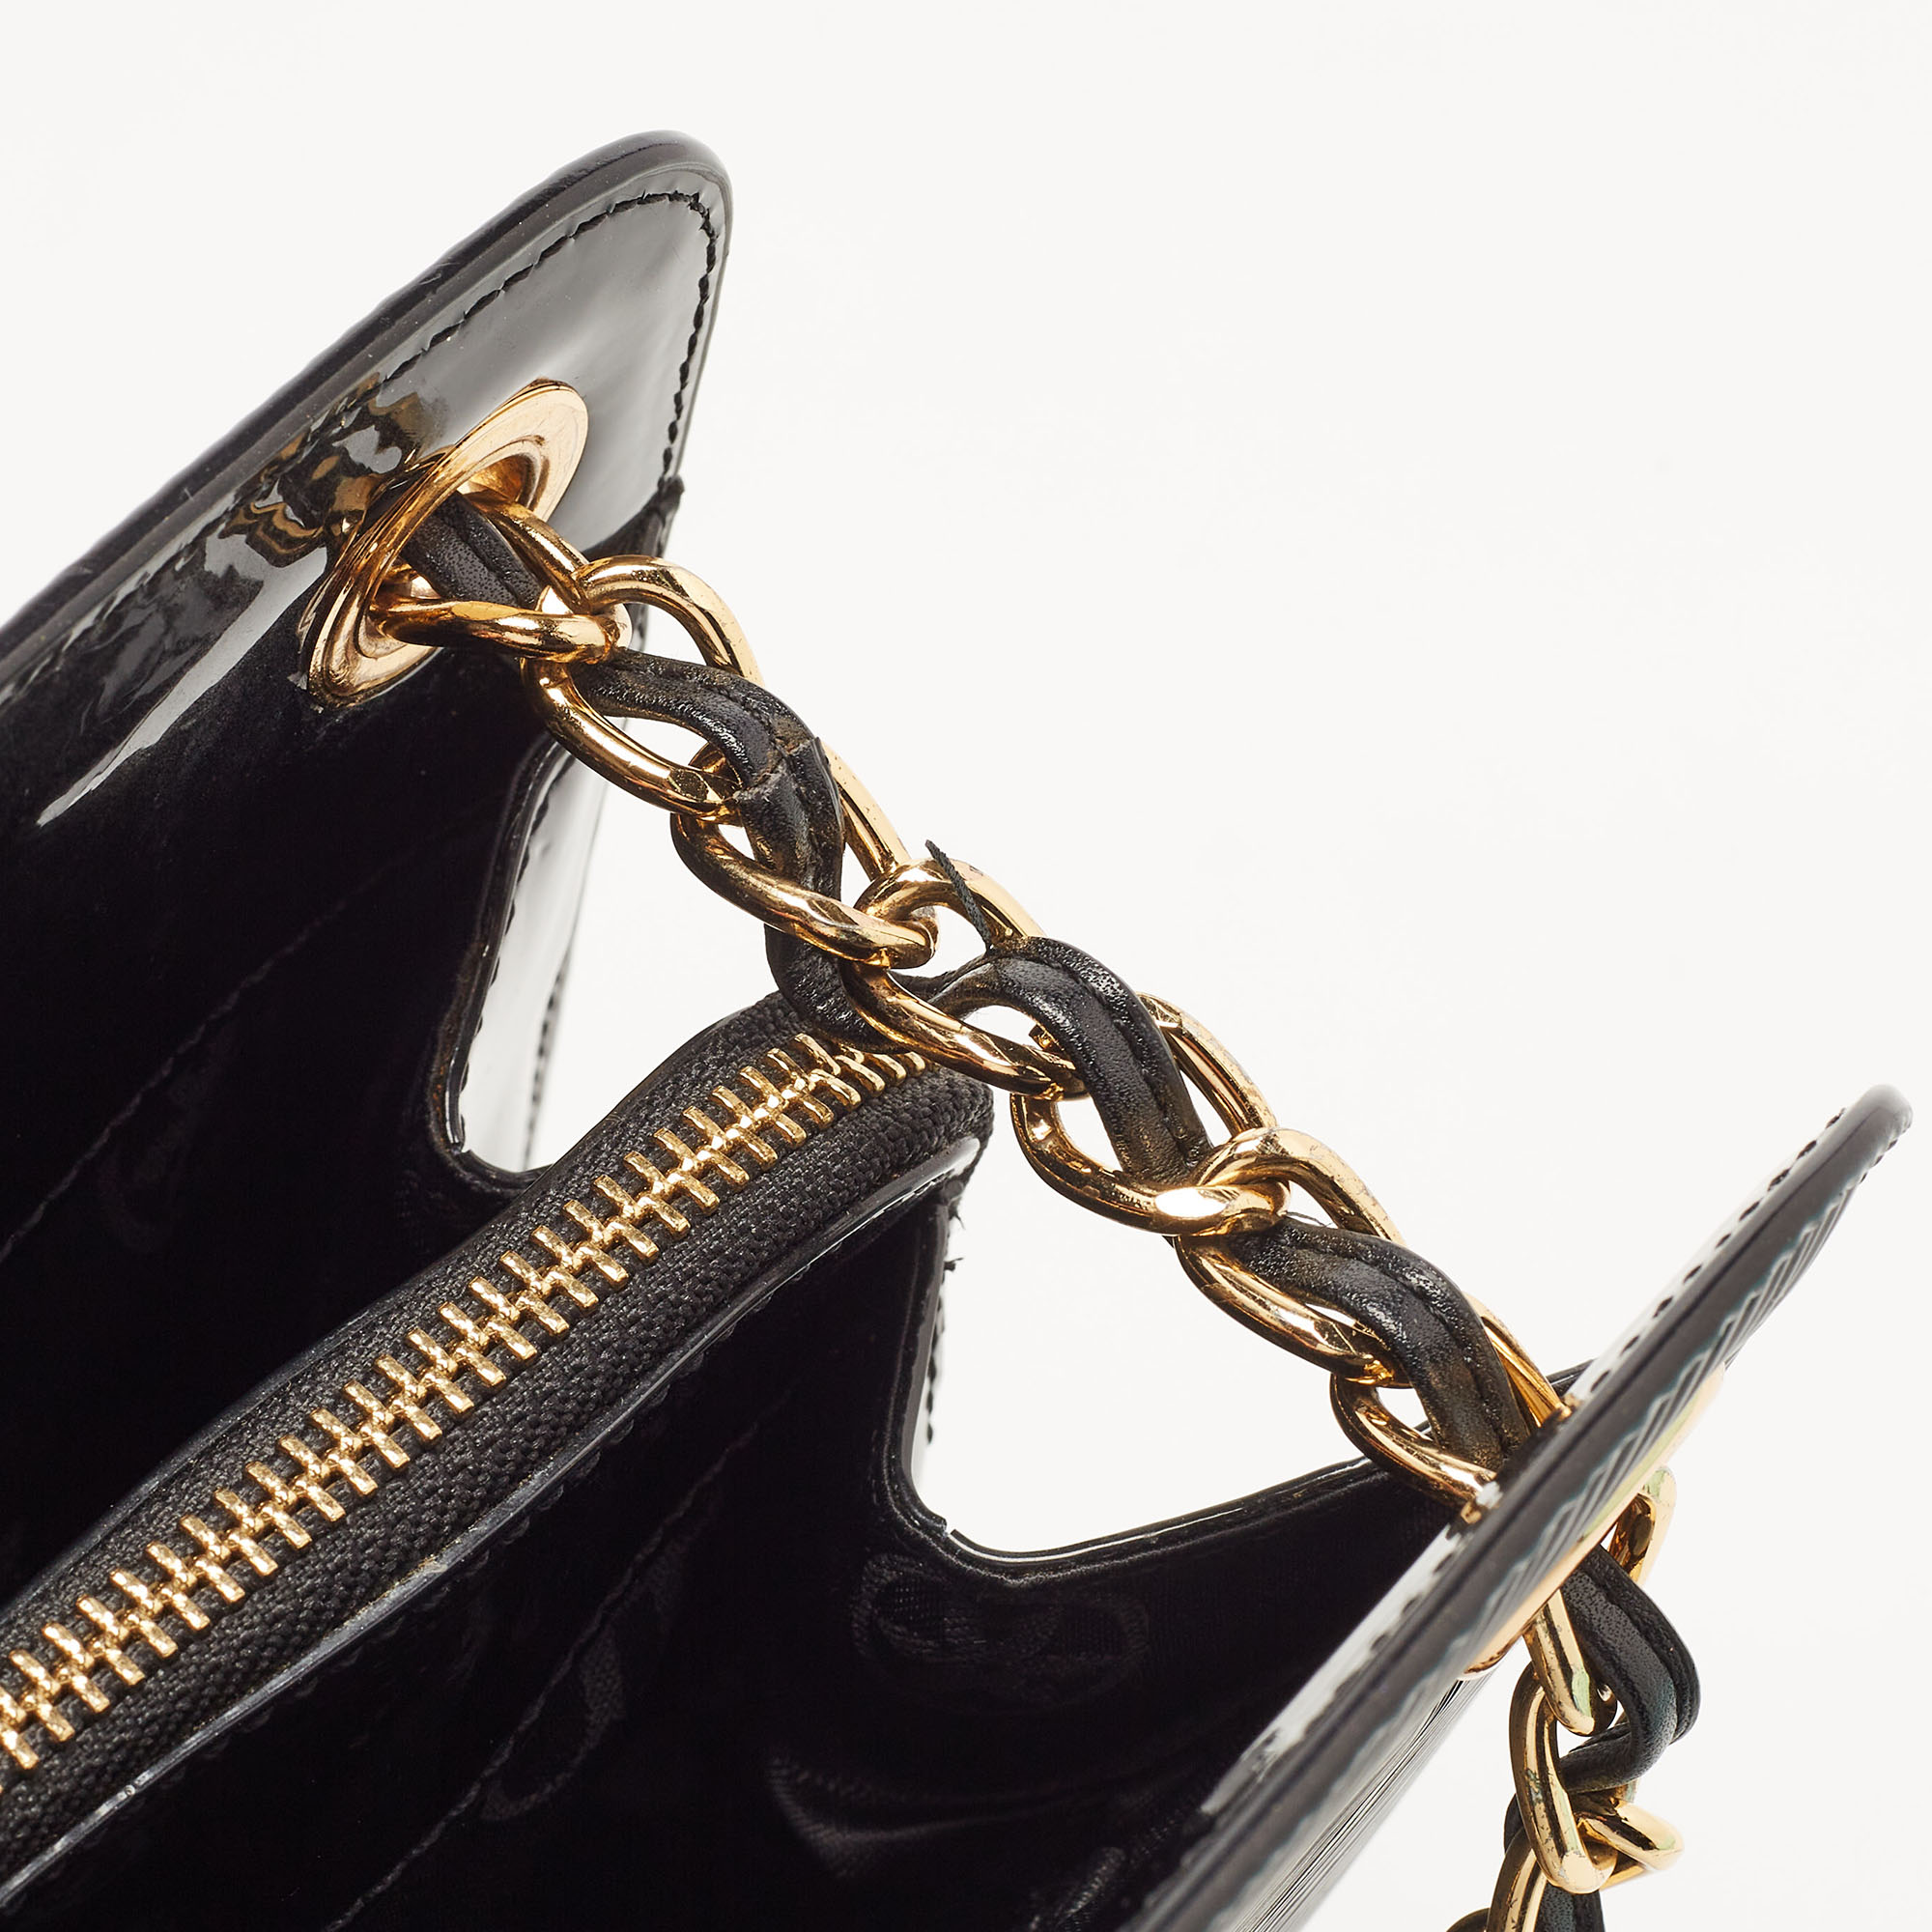 Gianfranco Ferre Black Patent Leather Chain Shoulder Bag